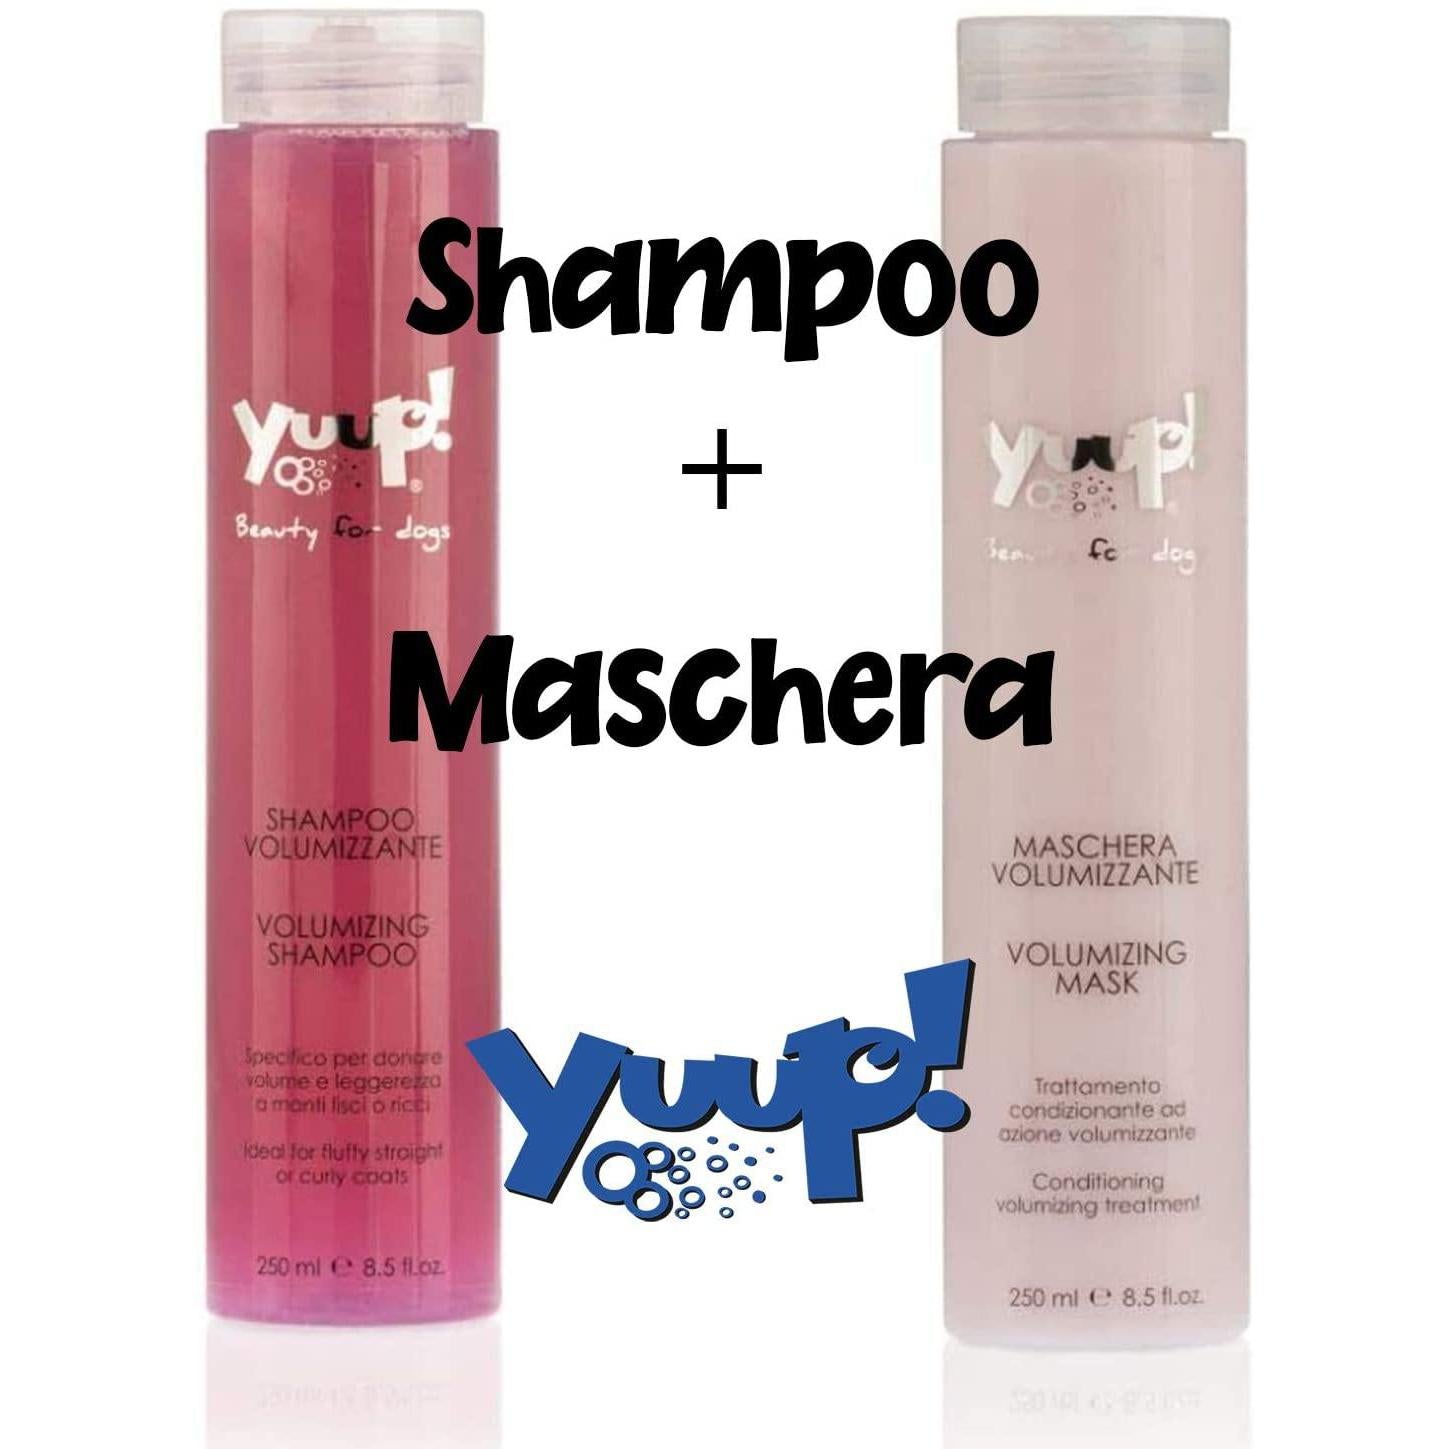 Yuup! Kit Shampoo Volumizzante + Maschera Volumizzante 250ml